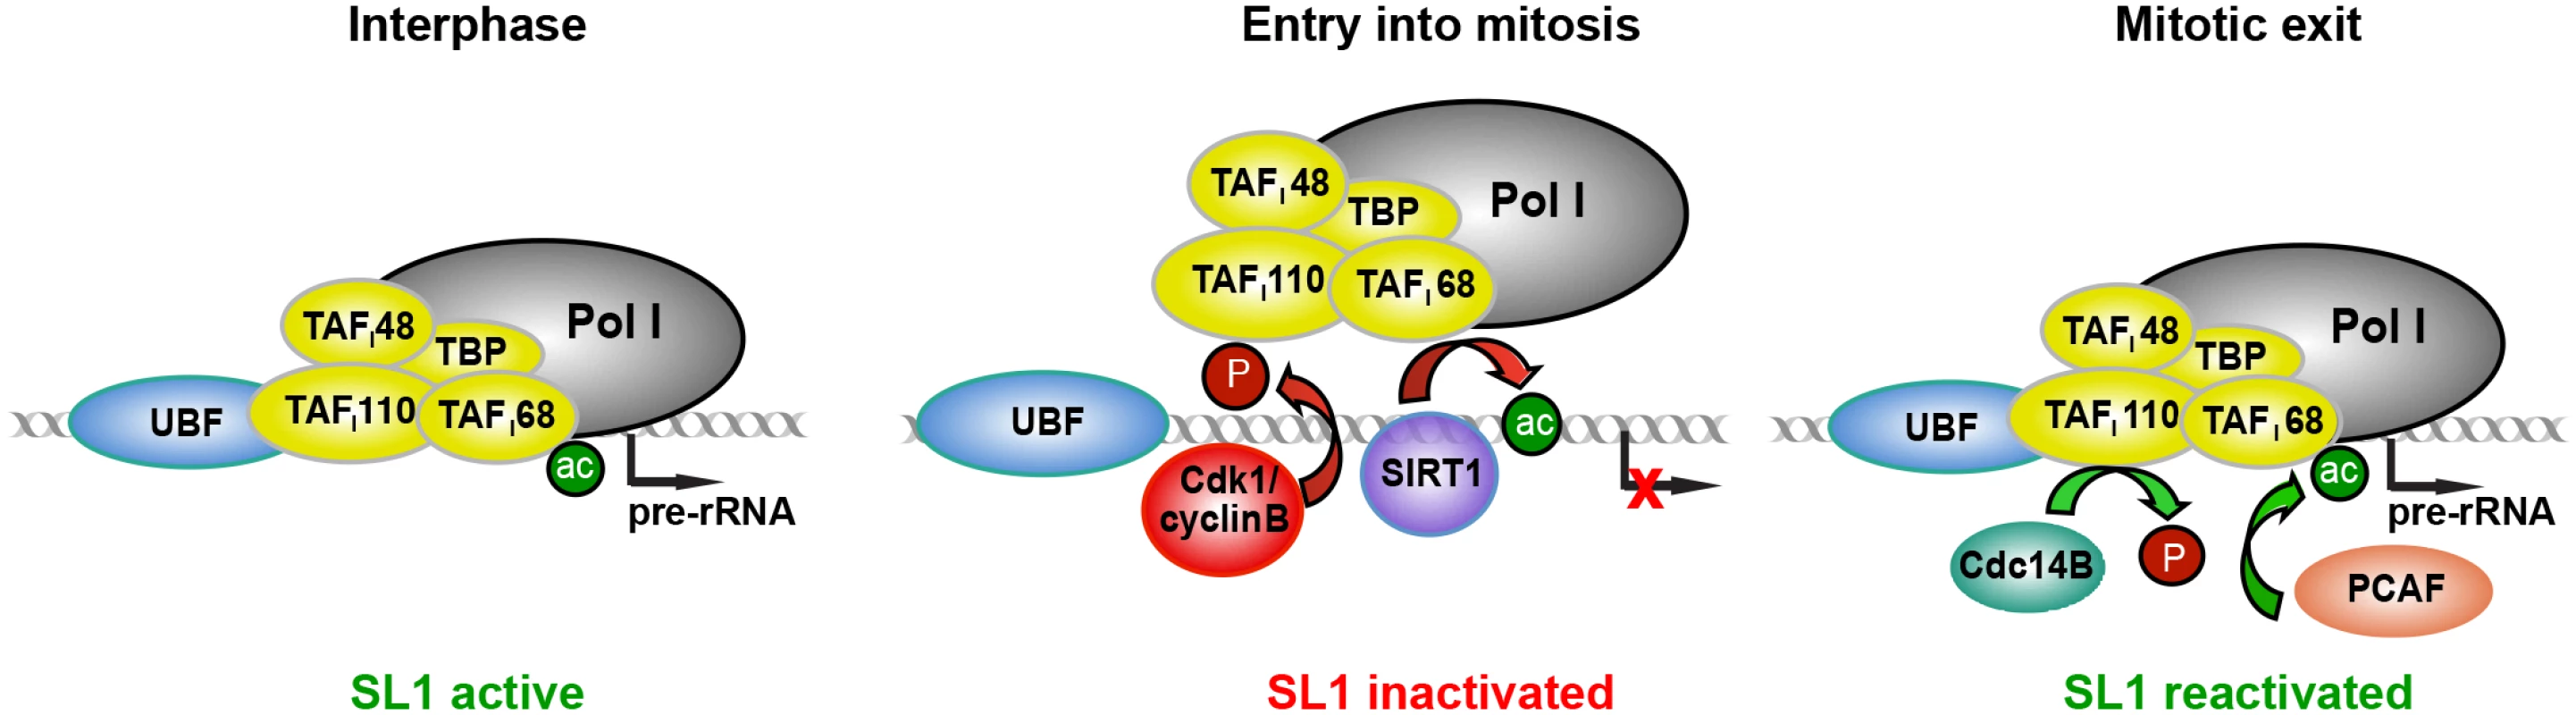 Model illustrating inactivation of SL1 and mitotic repression of Pol I transcription.